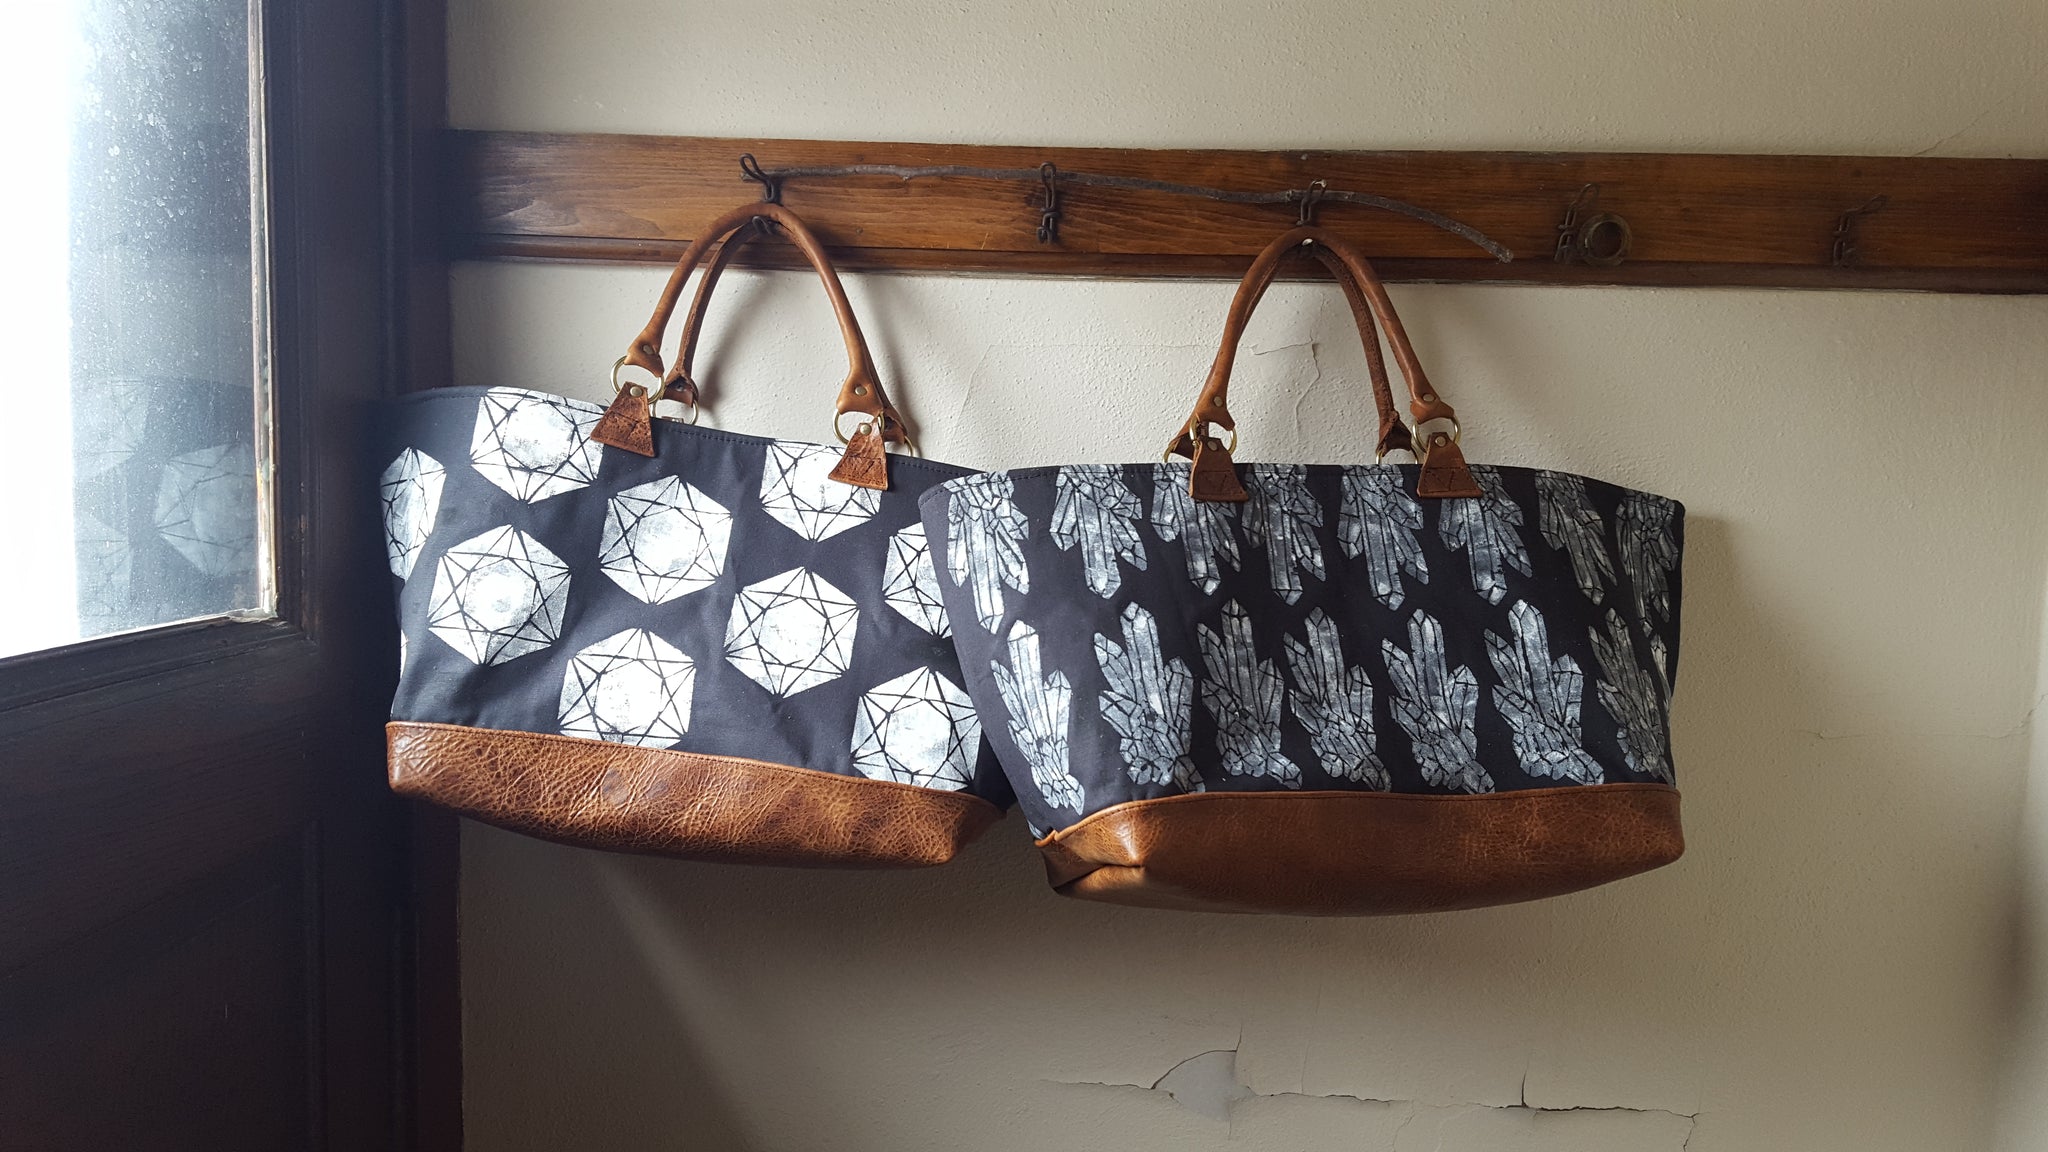 Making Handmade Handbags as a Self-Taught Designer